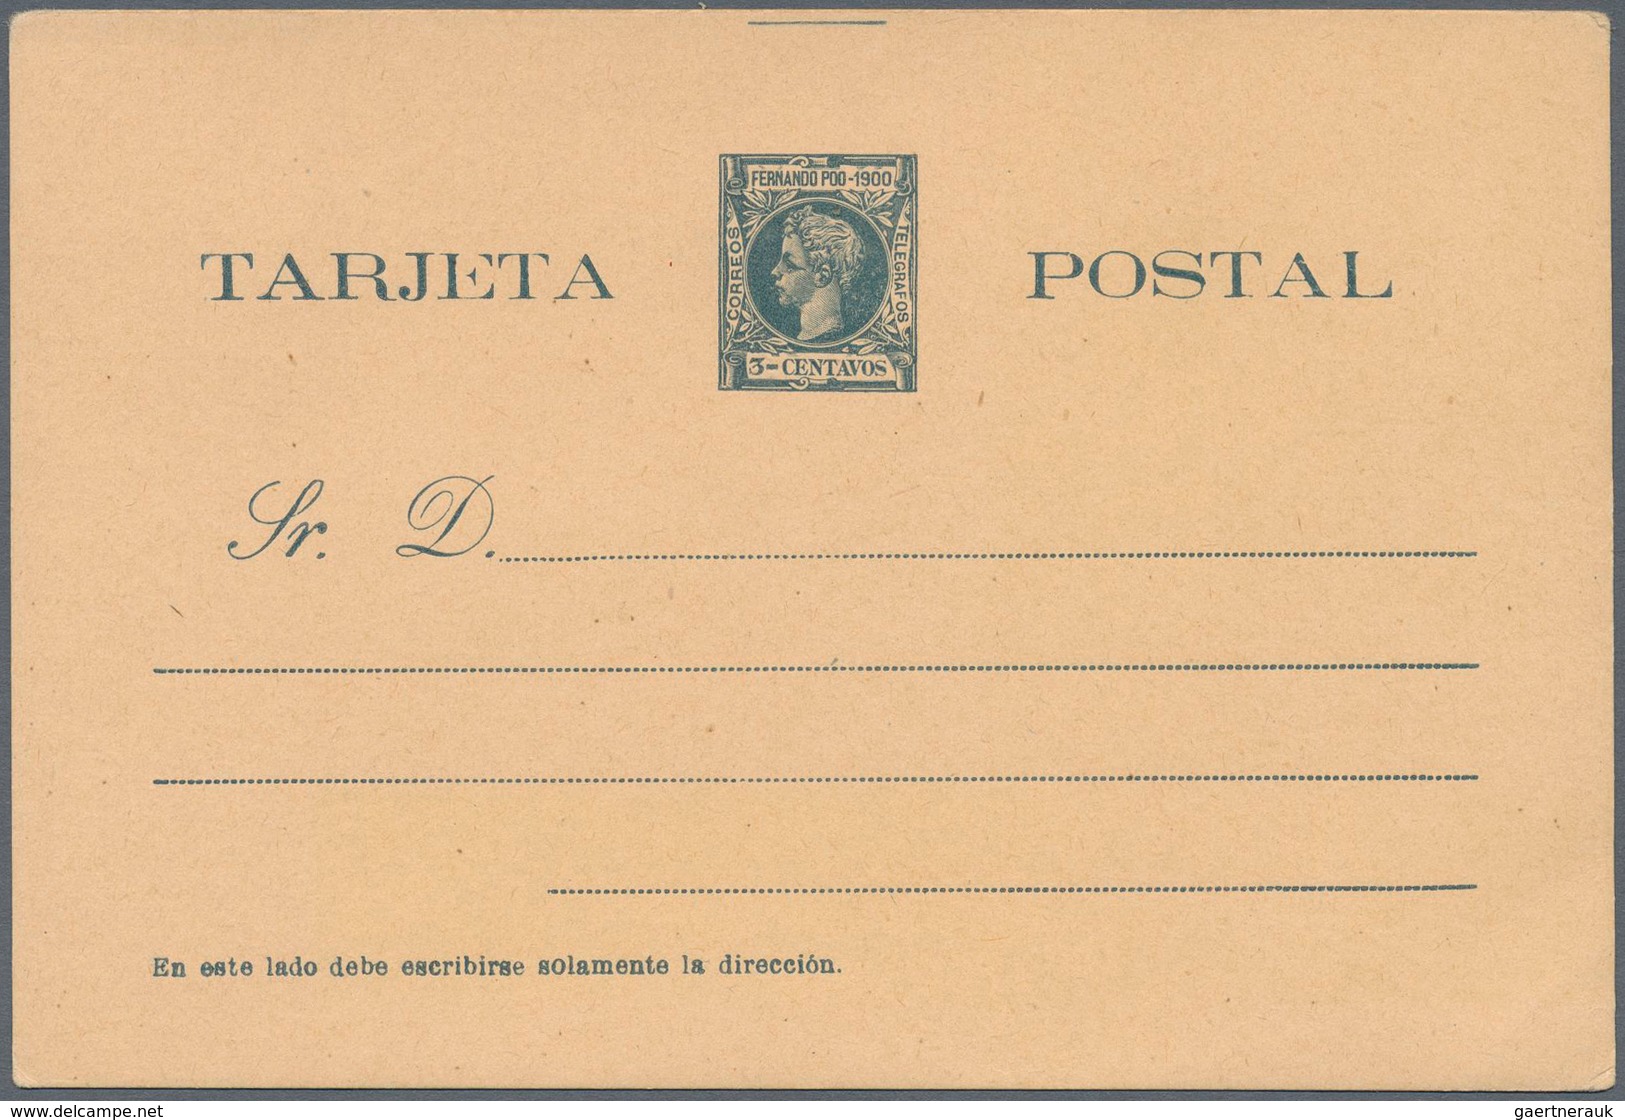 Spanien - Ganzsachen: 1900. Lot of 4 postcards Alfonso XIII Infante "Fernando Poo-1900": one card 5m